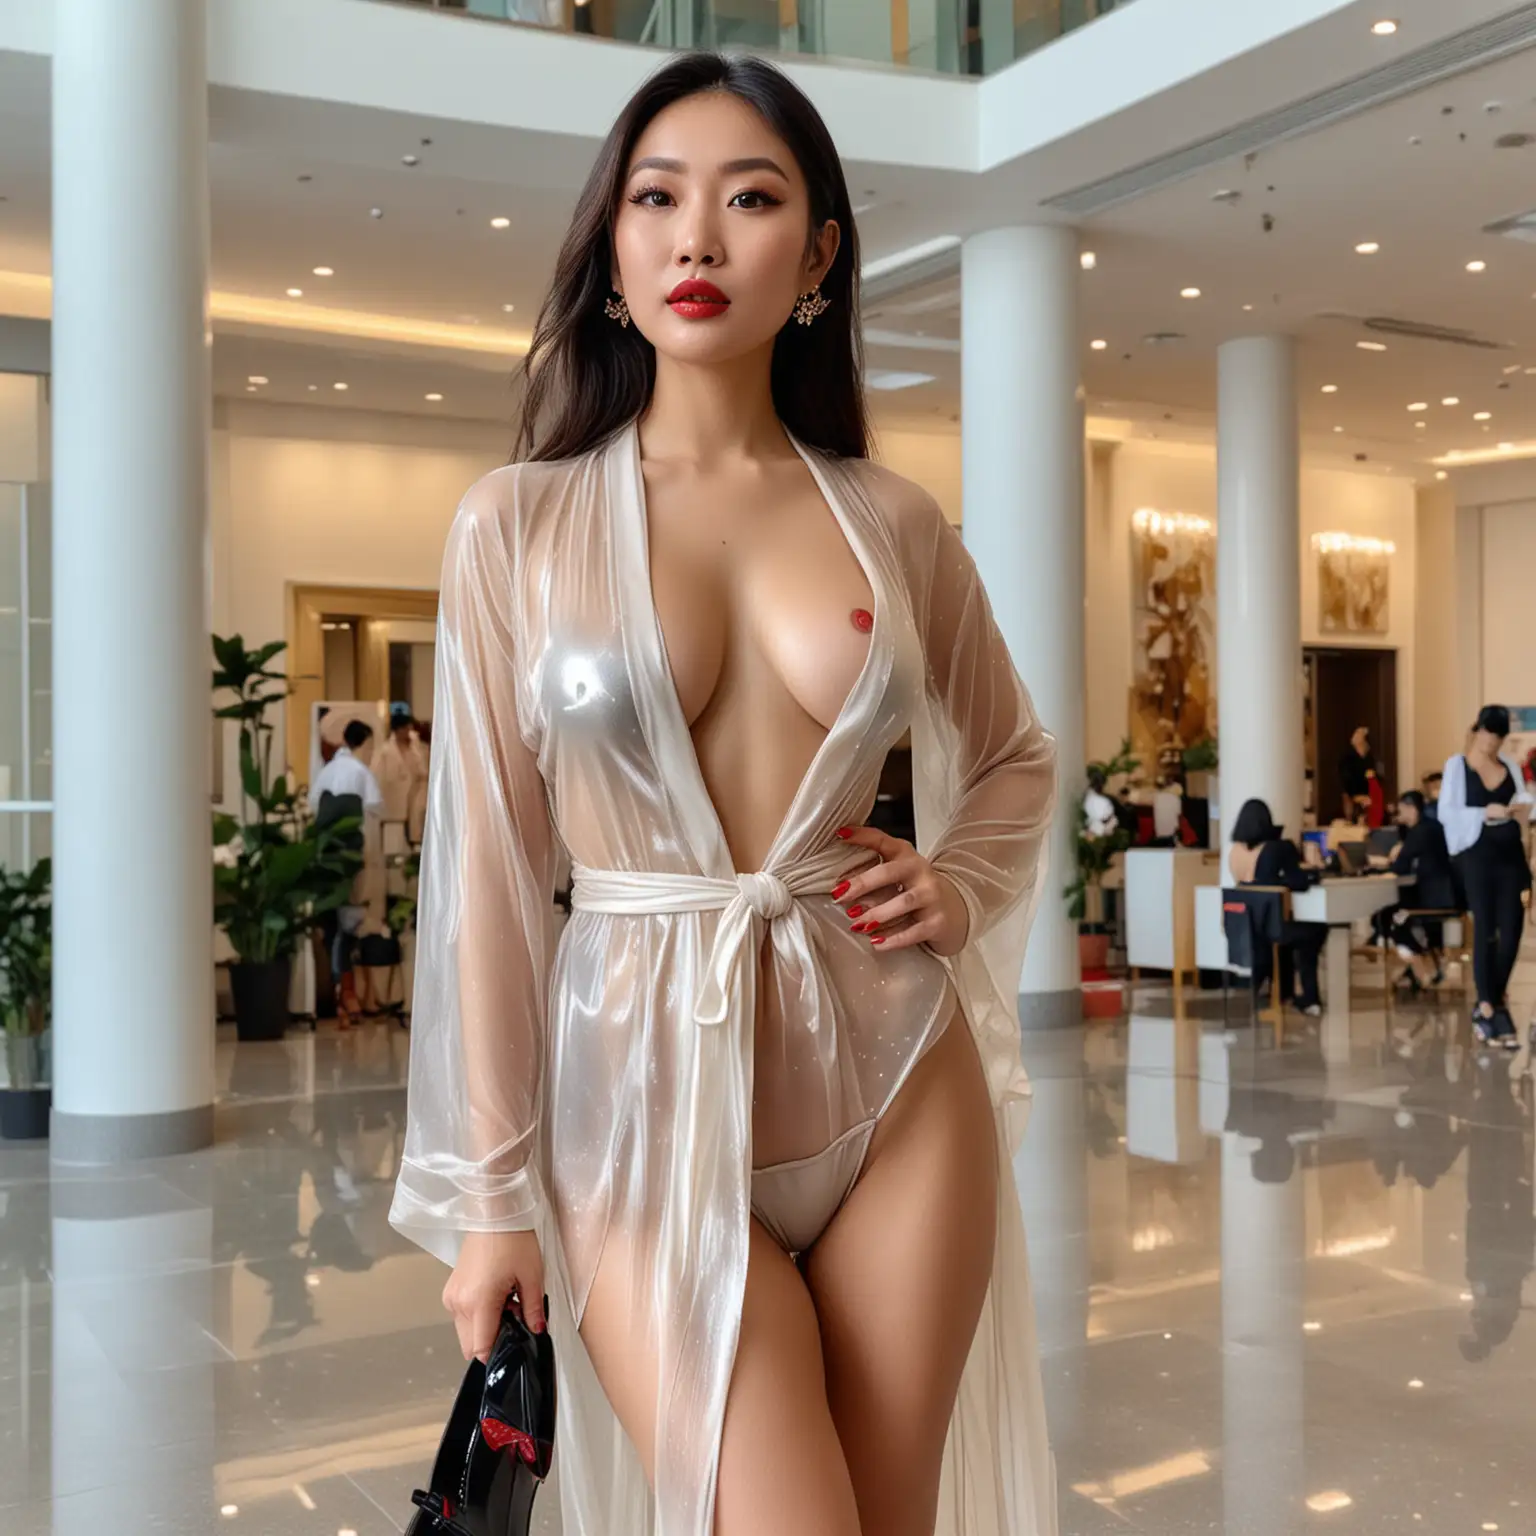 Stunning Singaporean Influencer Captivates Office Lobby in Metallic Bikini and Silk Robe